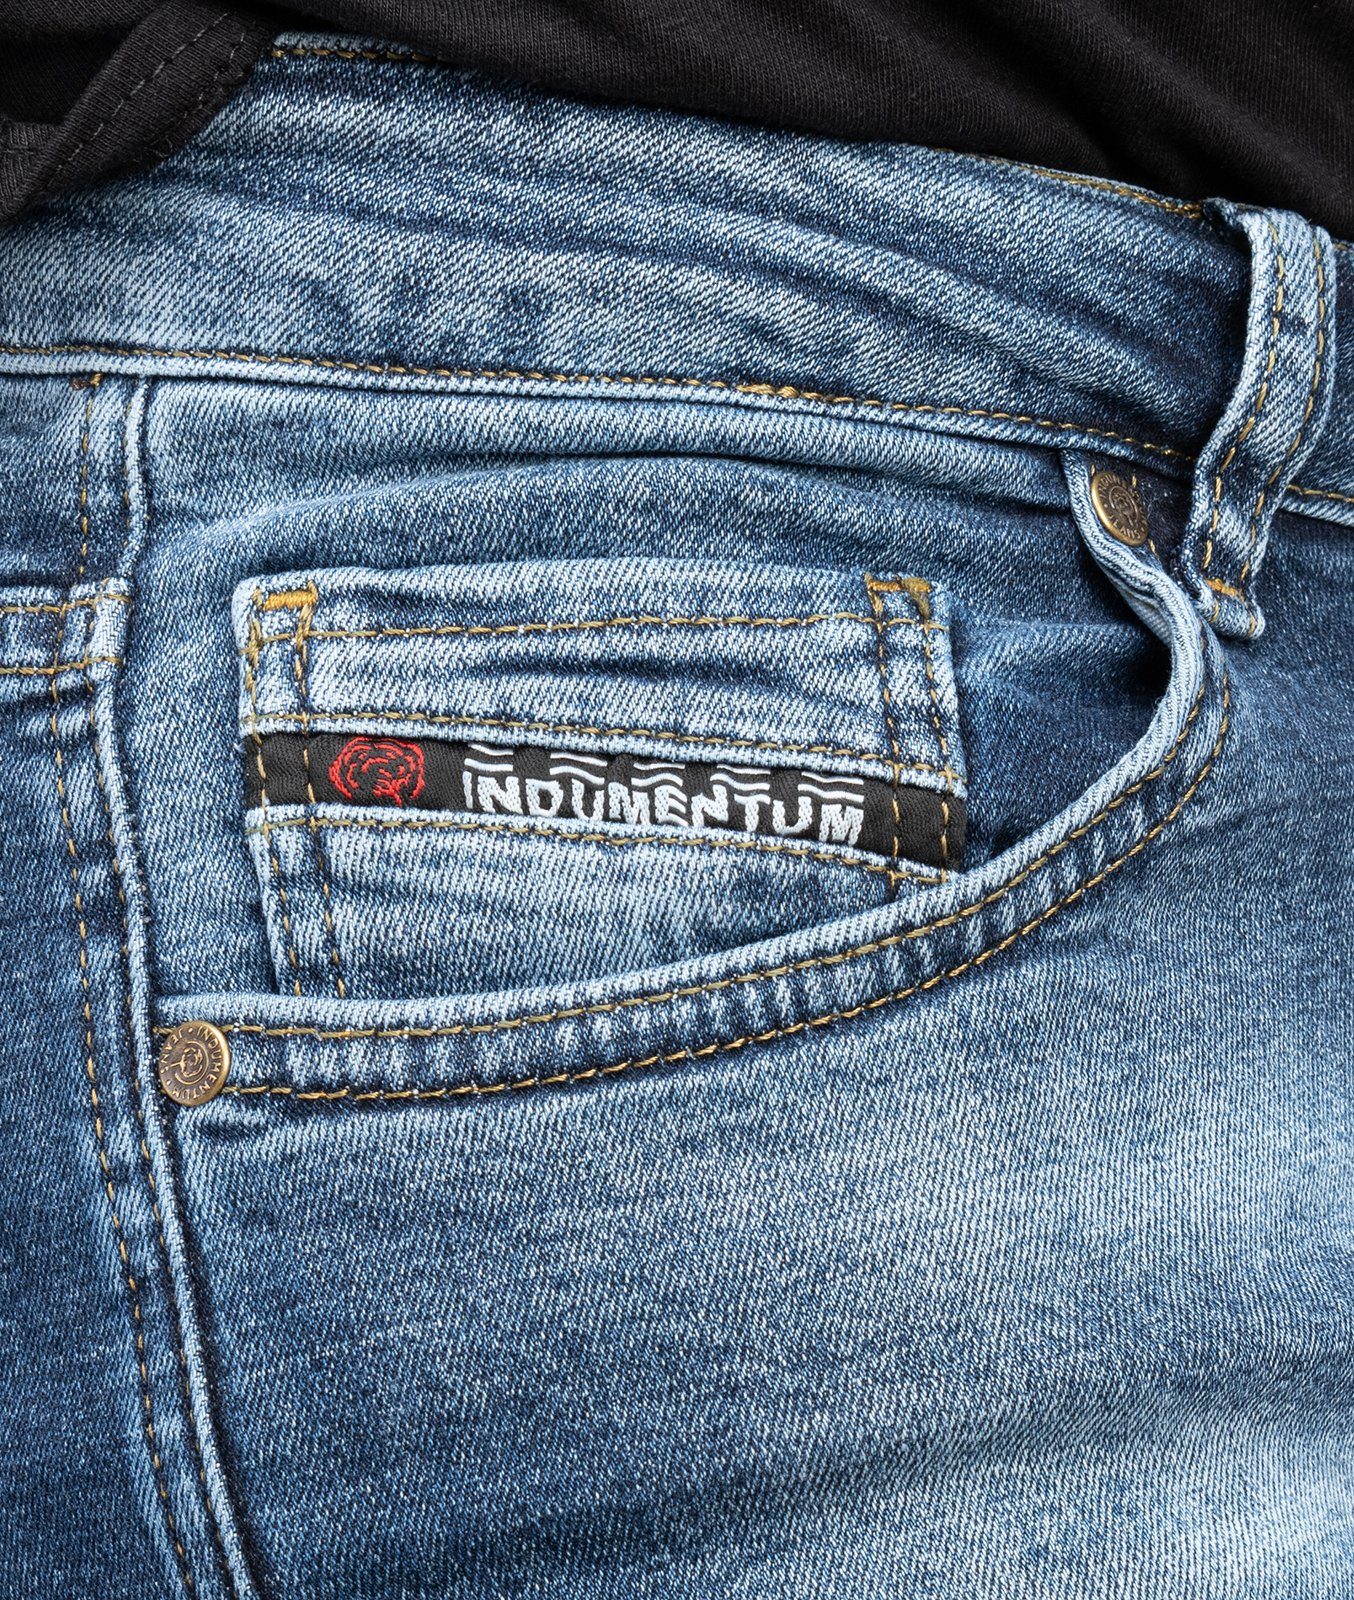 IS-300 Indumentum Slim-fit-Jeans Stonewashed Herren Jeans Blau